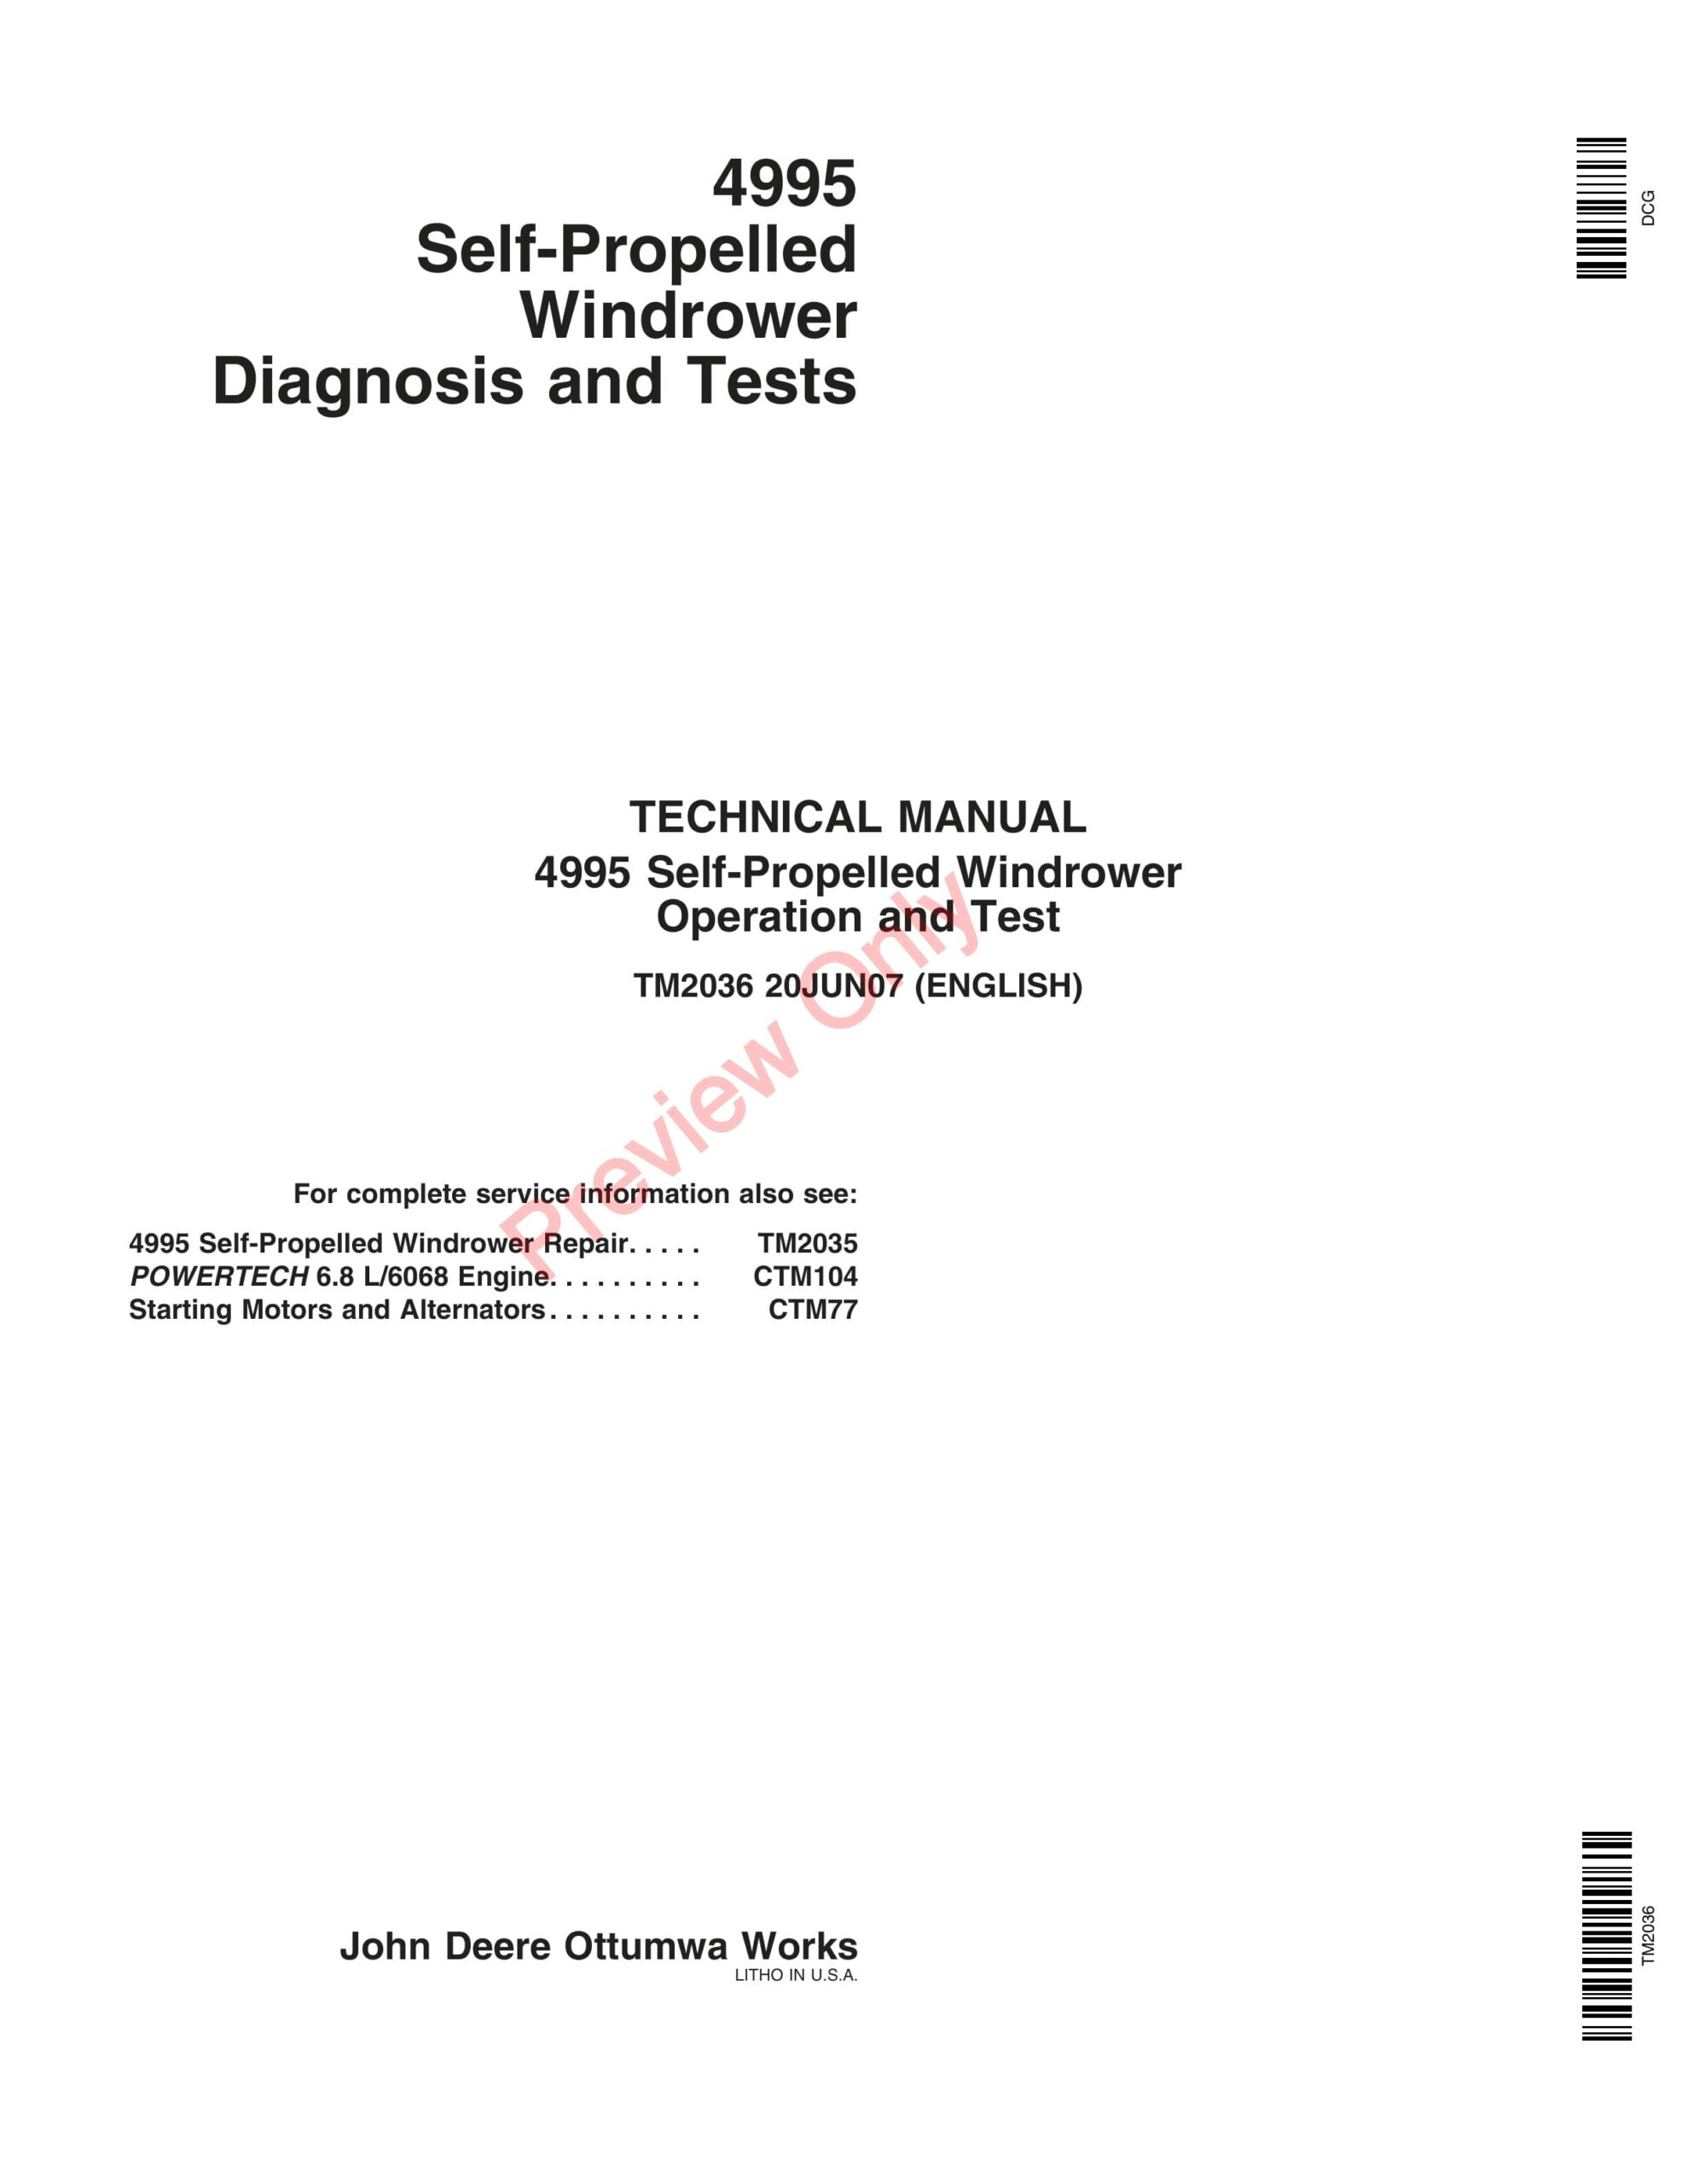 John Deere 4995 Self-Propelled Windrower Technical Manual TM2036 20JUN07-1